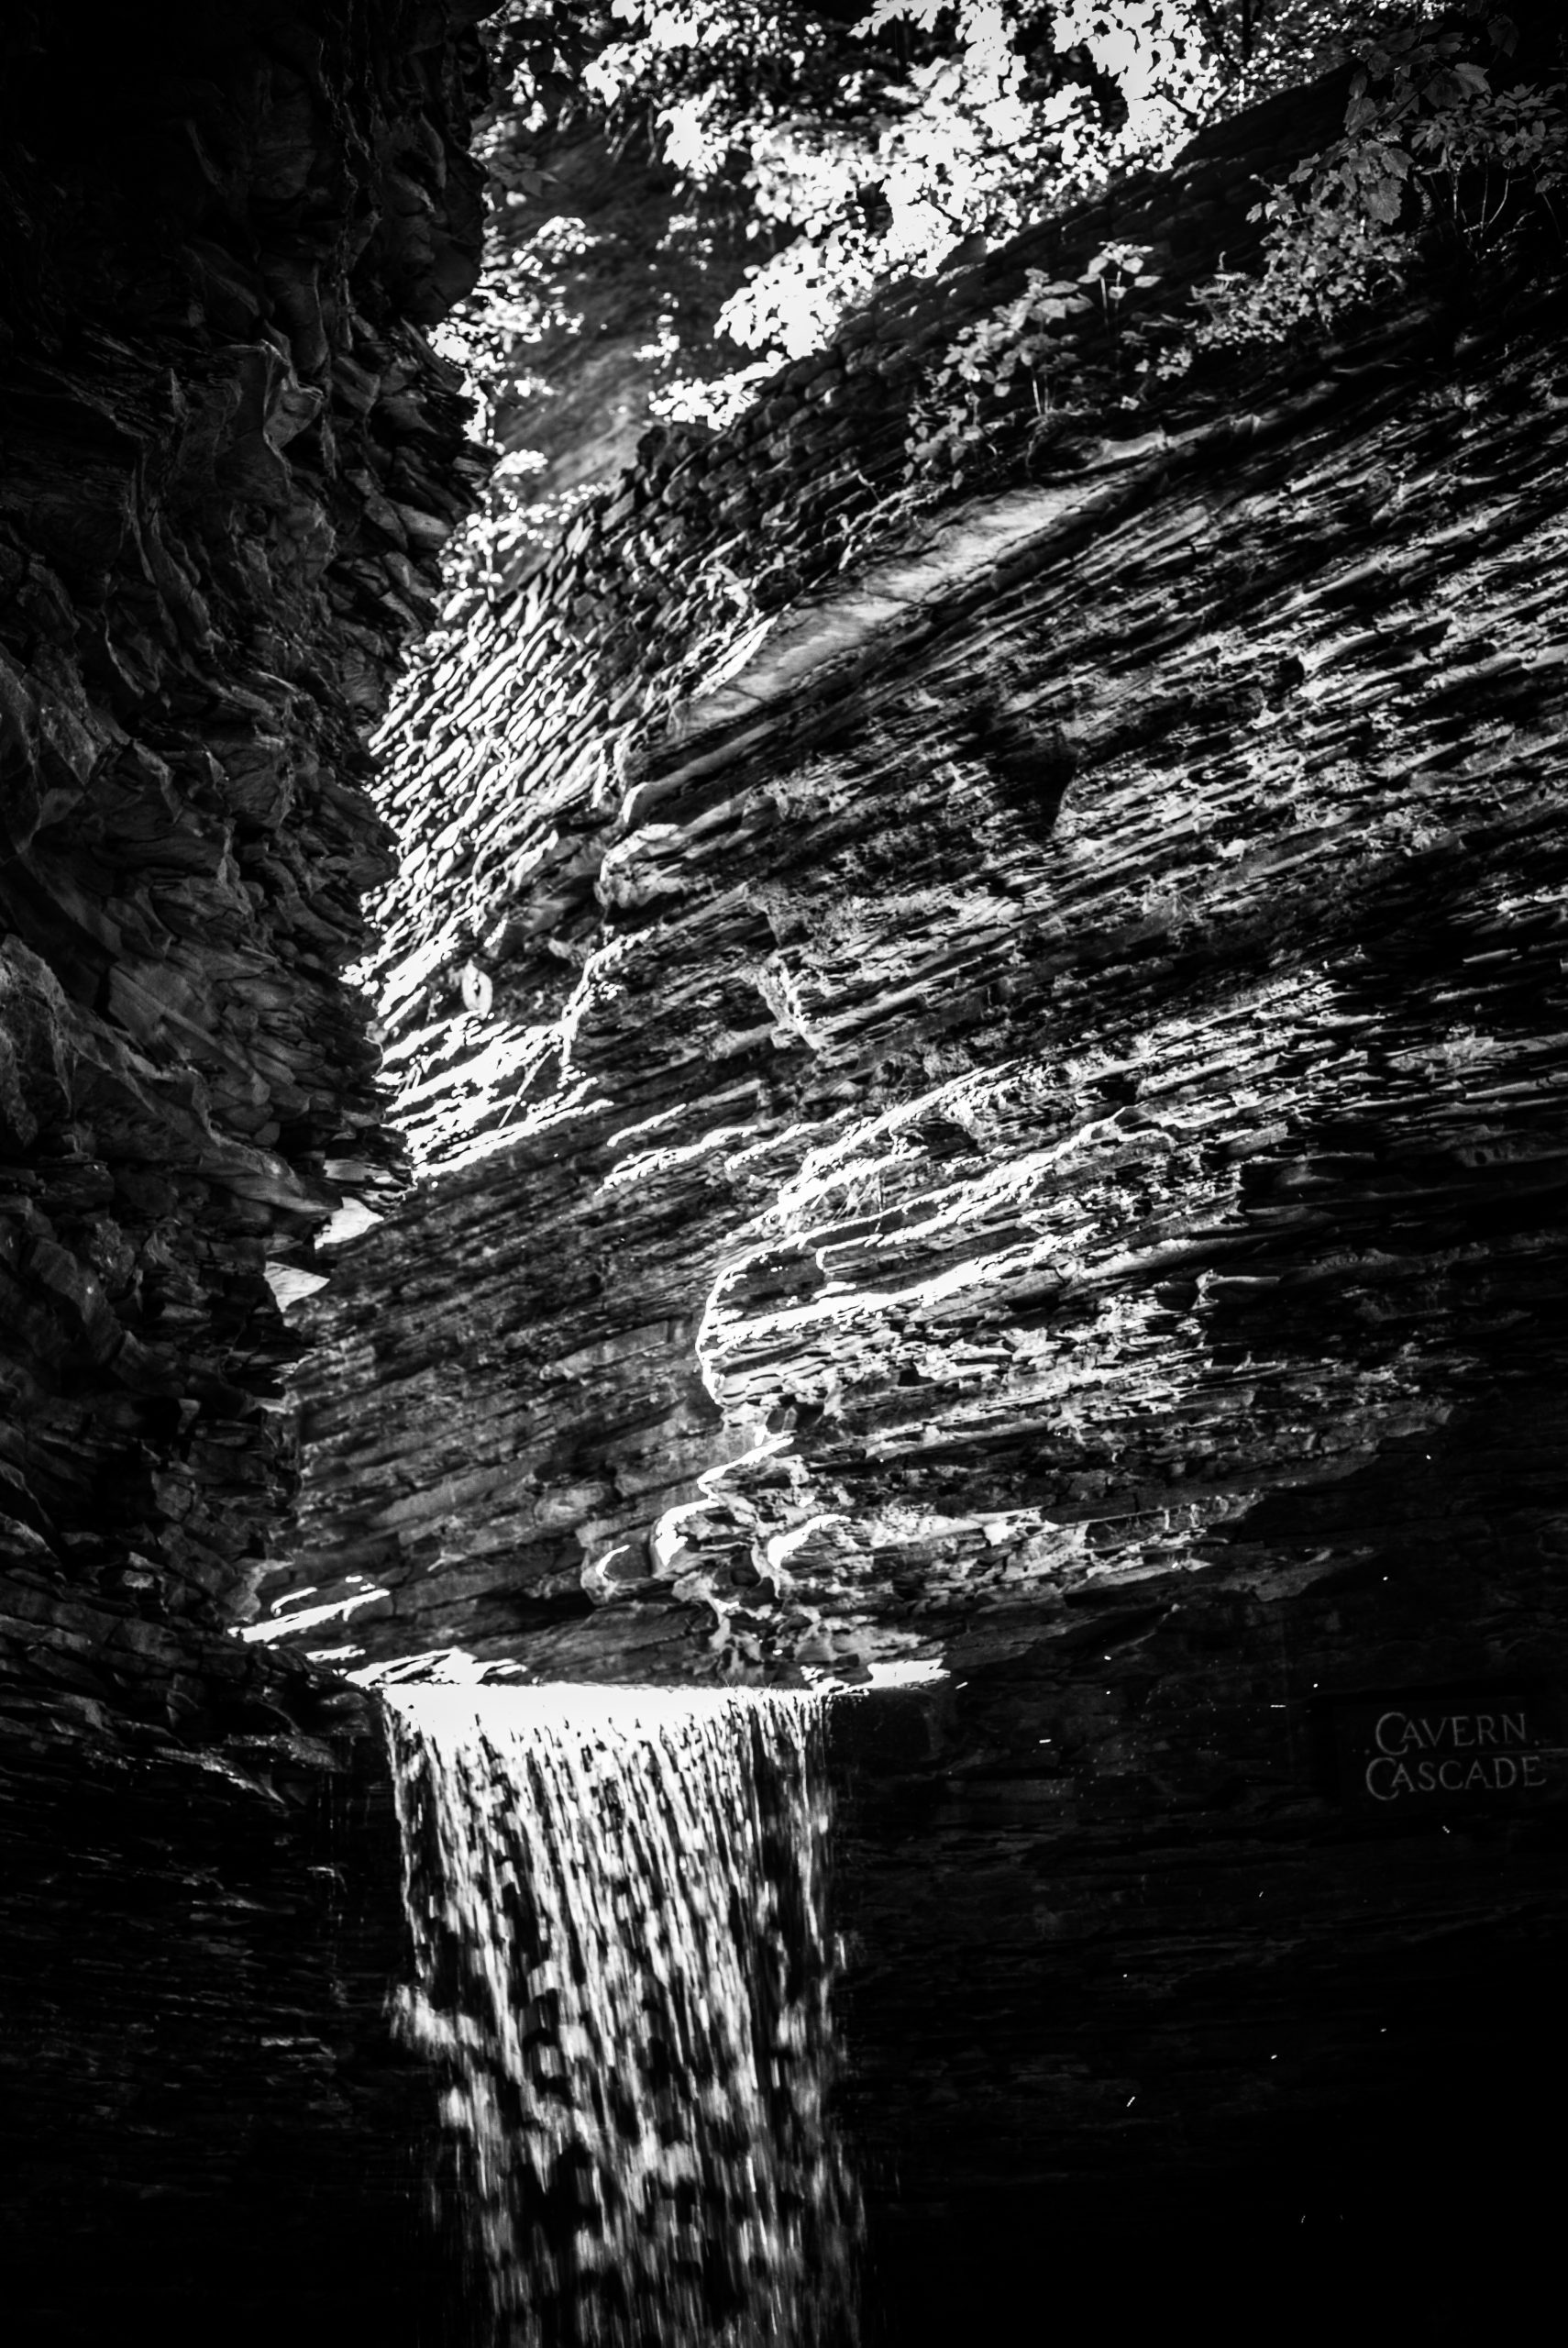 Ithaca Series: Waterfall #8